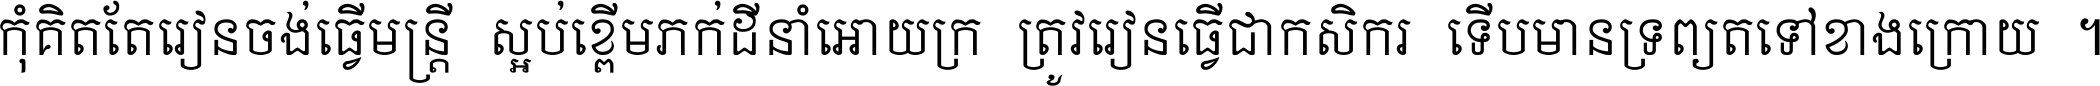 Khmer Mondulkiri A